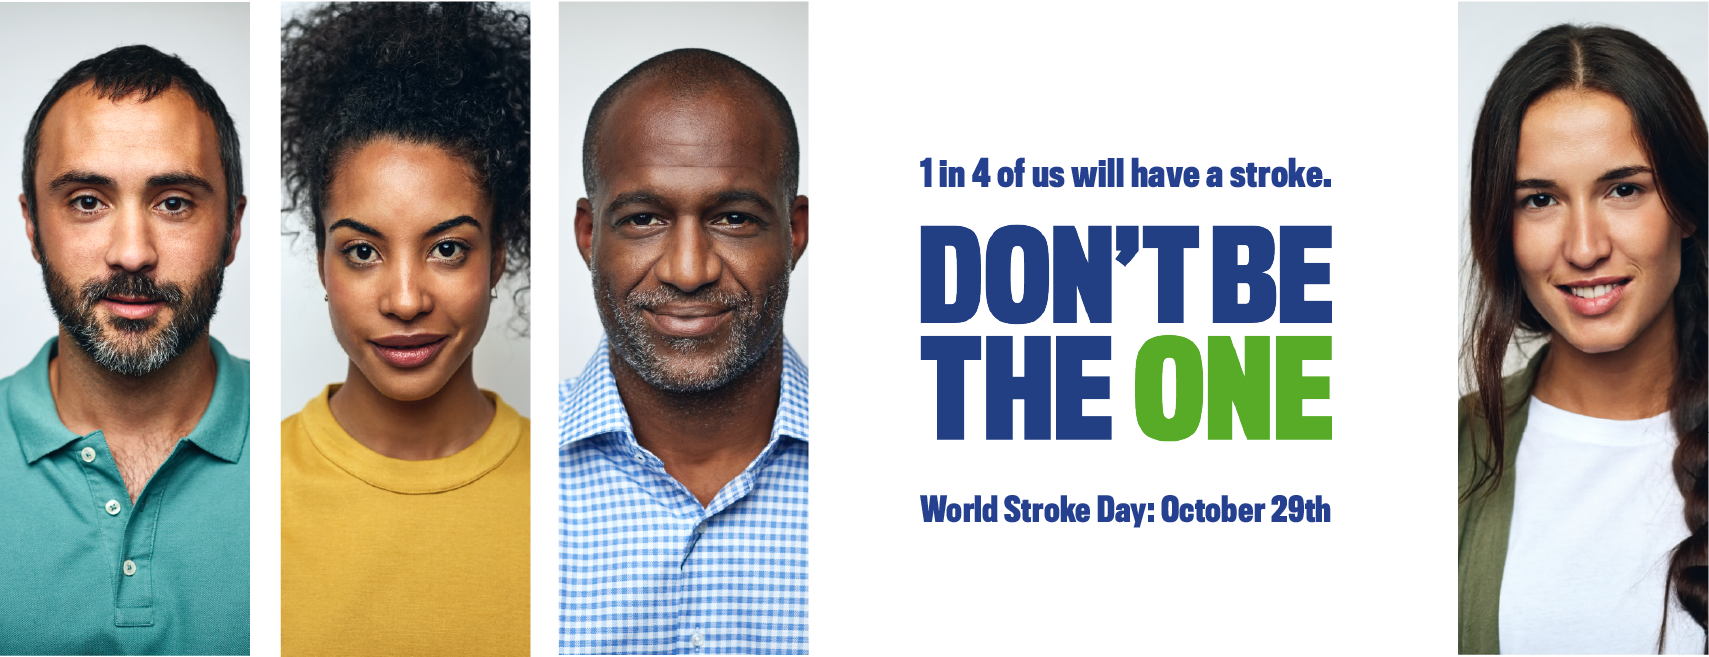 World Stroke Day Facebook